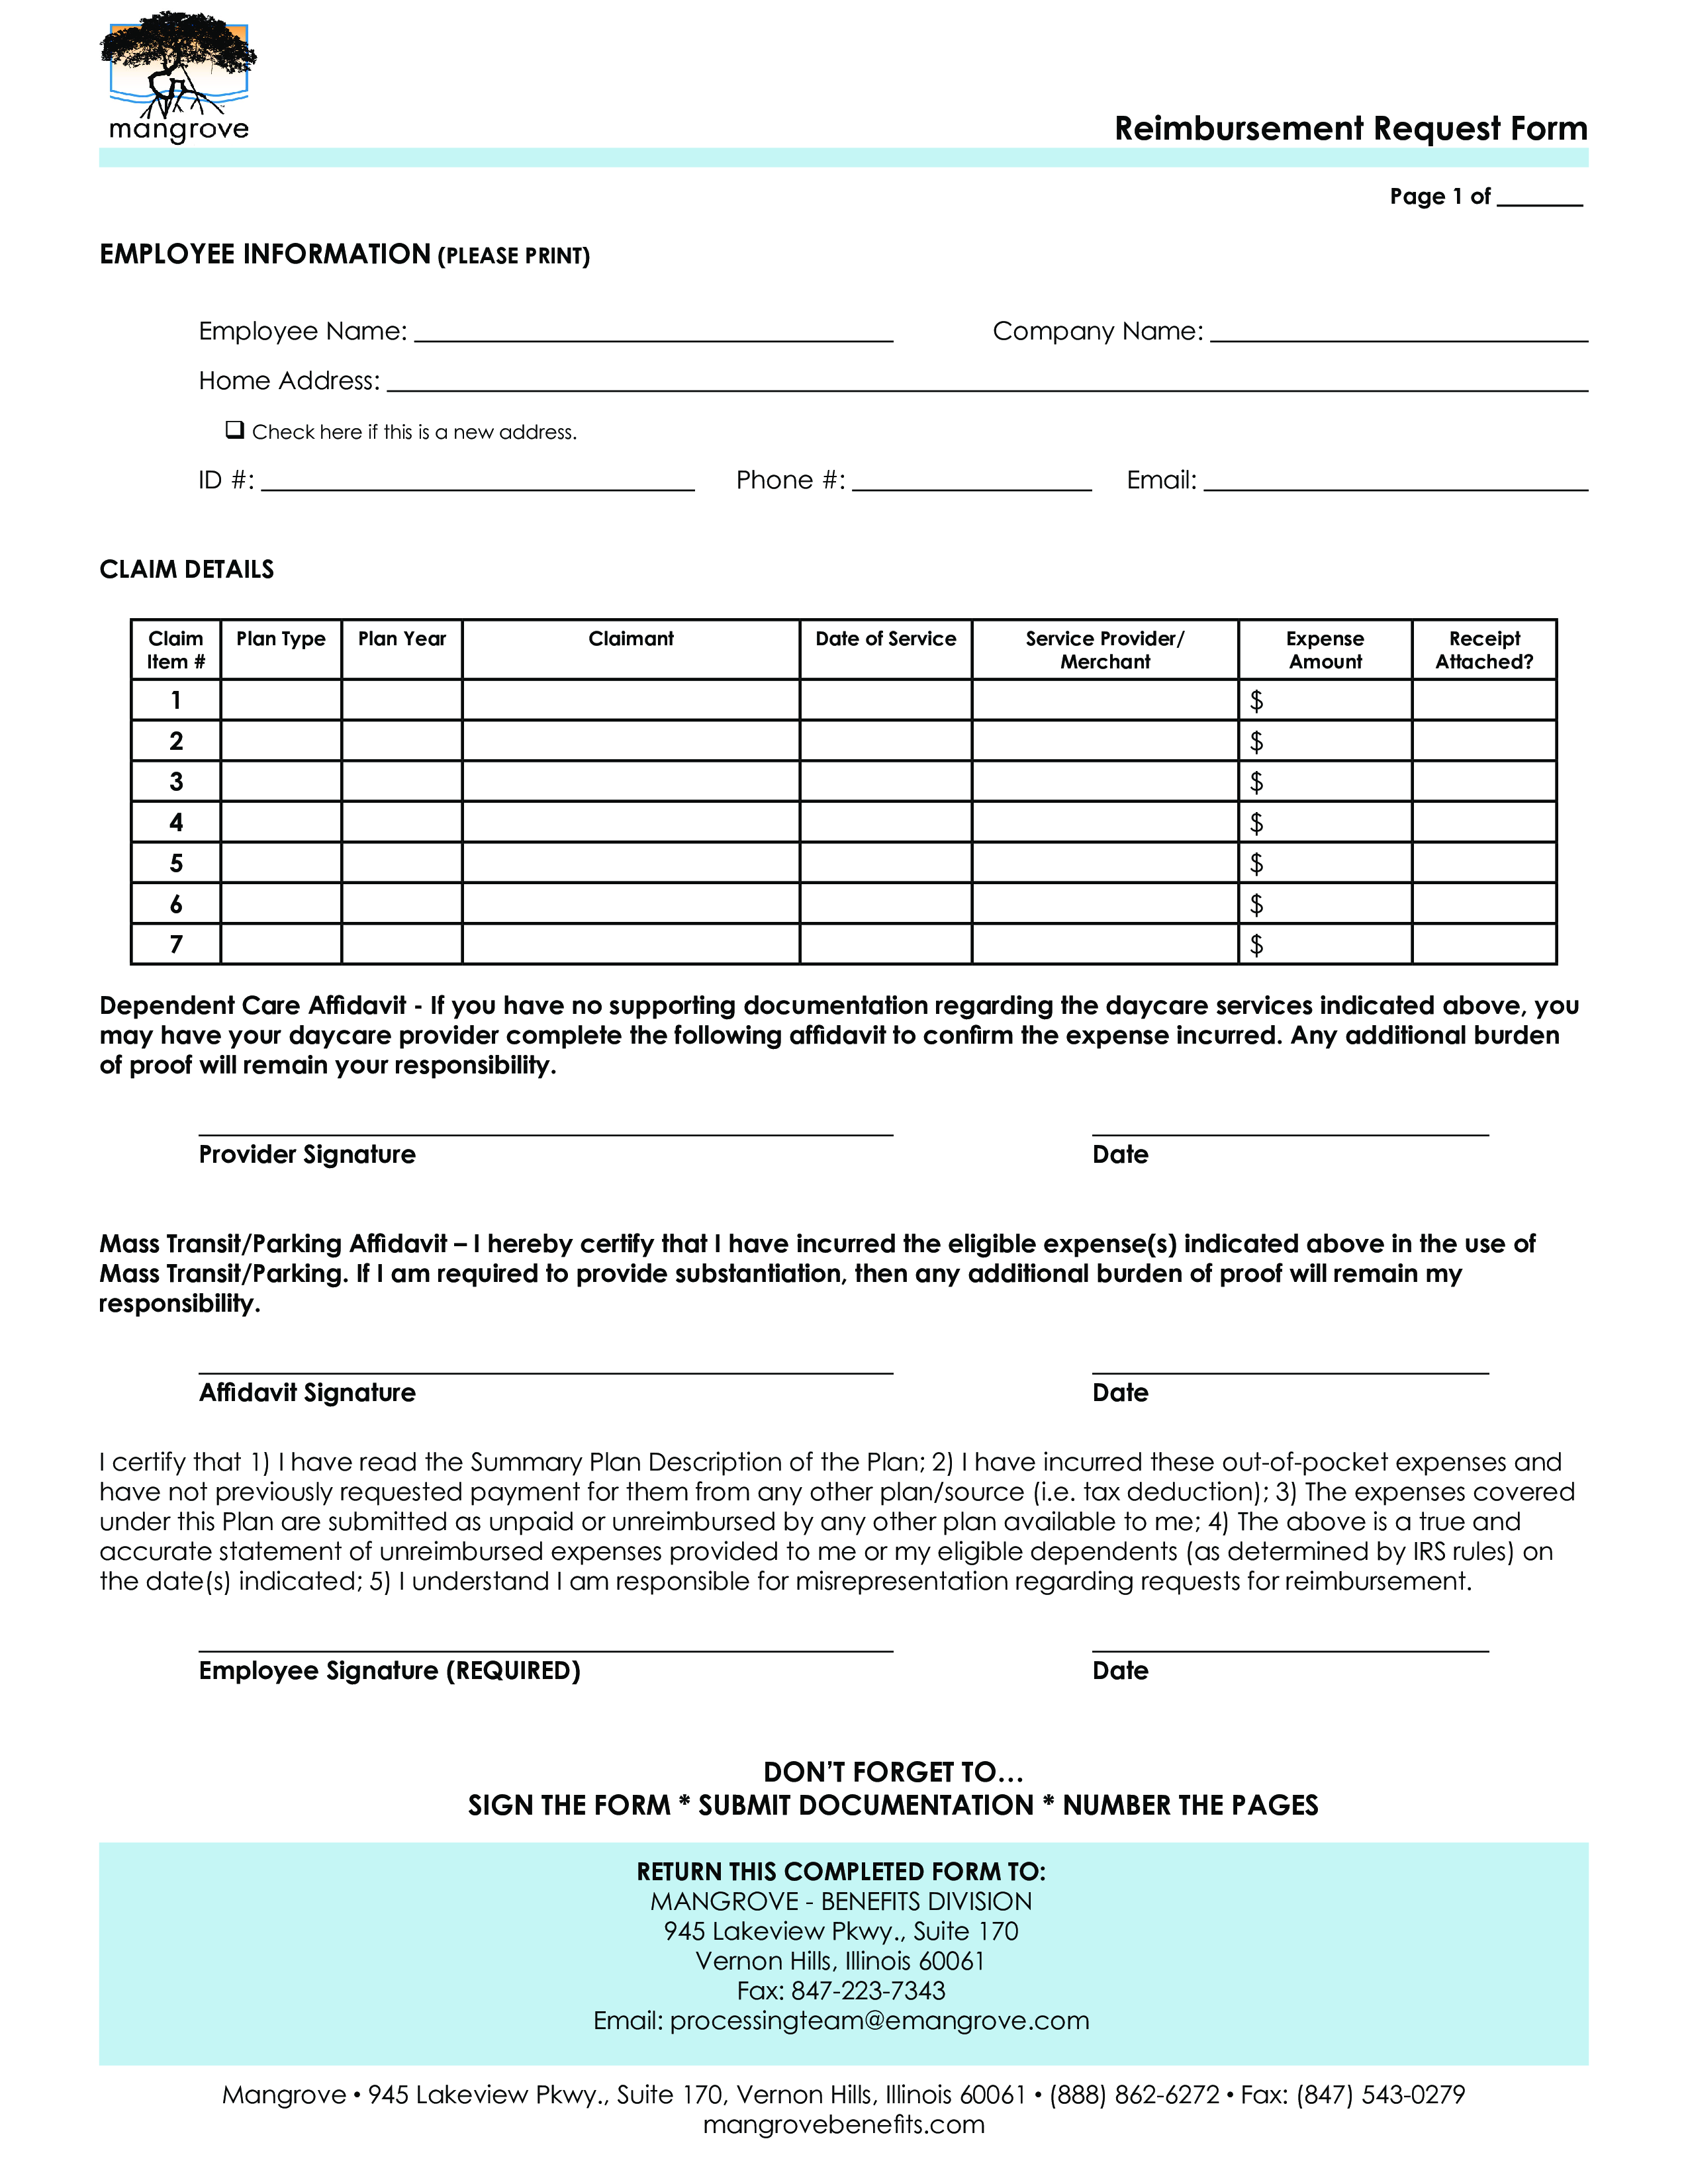 kostenloses-reimbursement-request-form